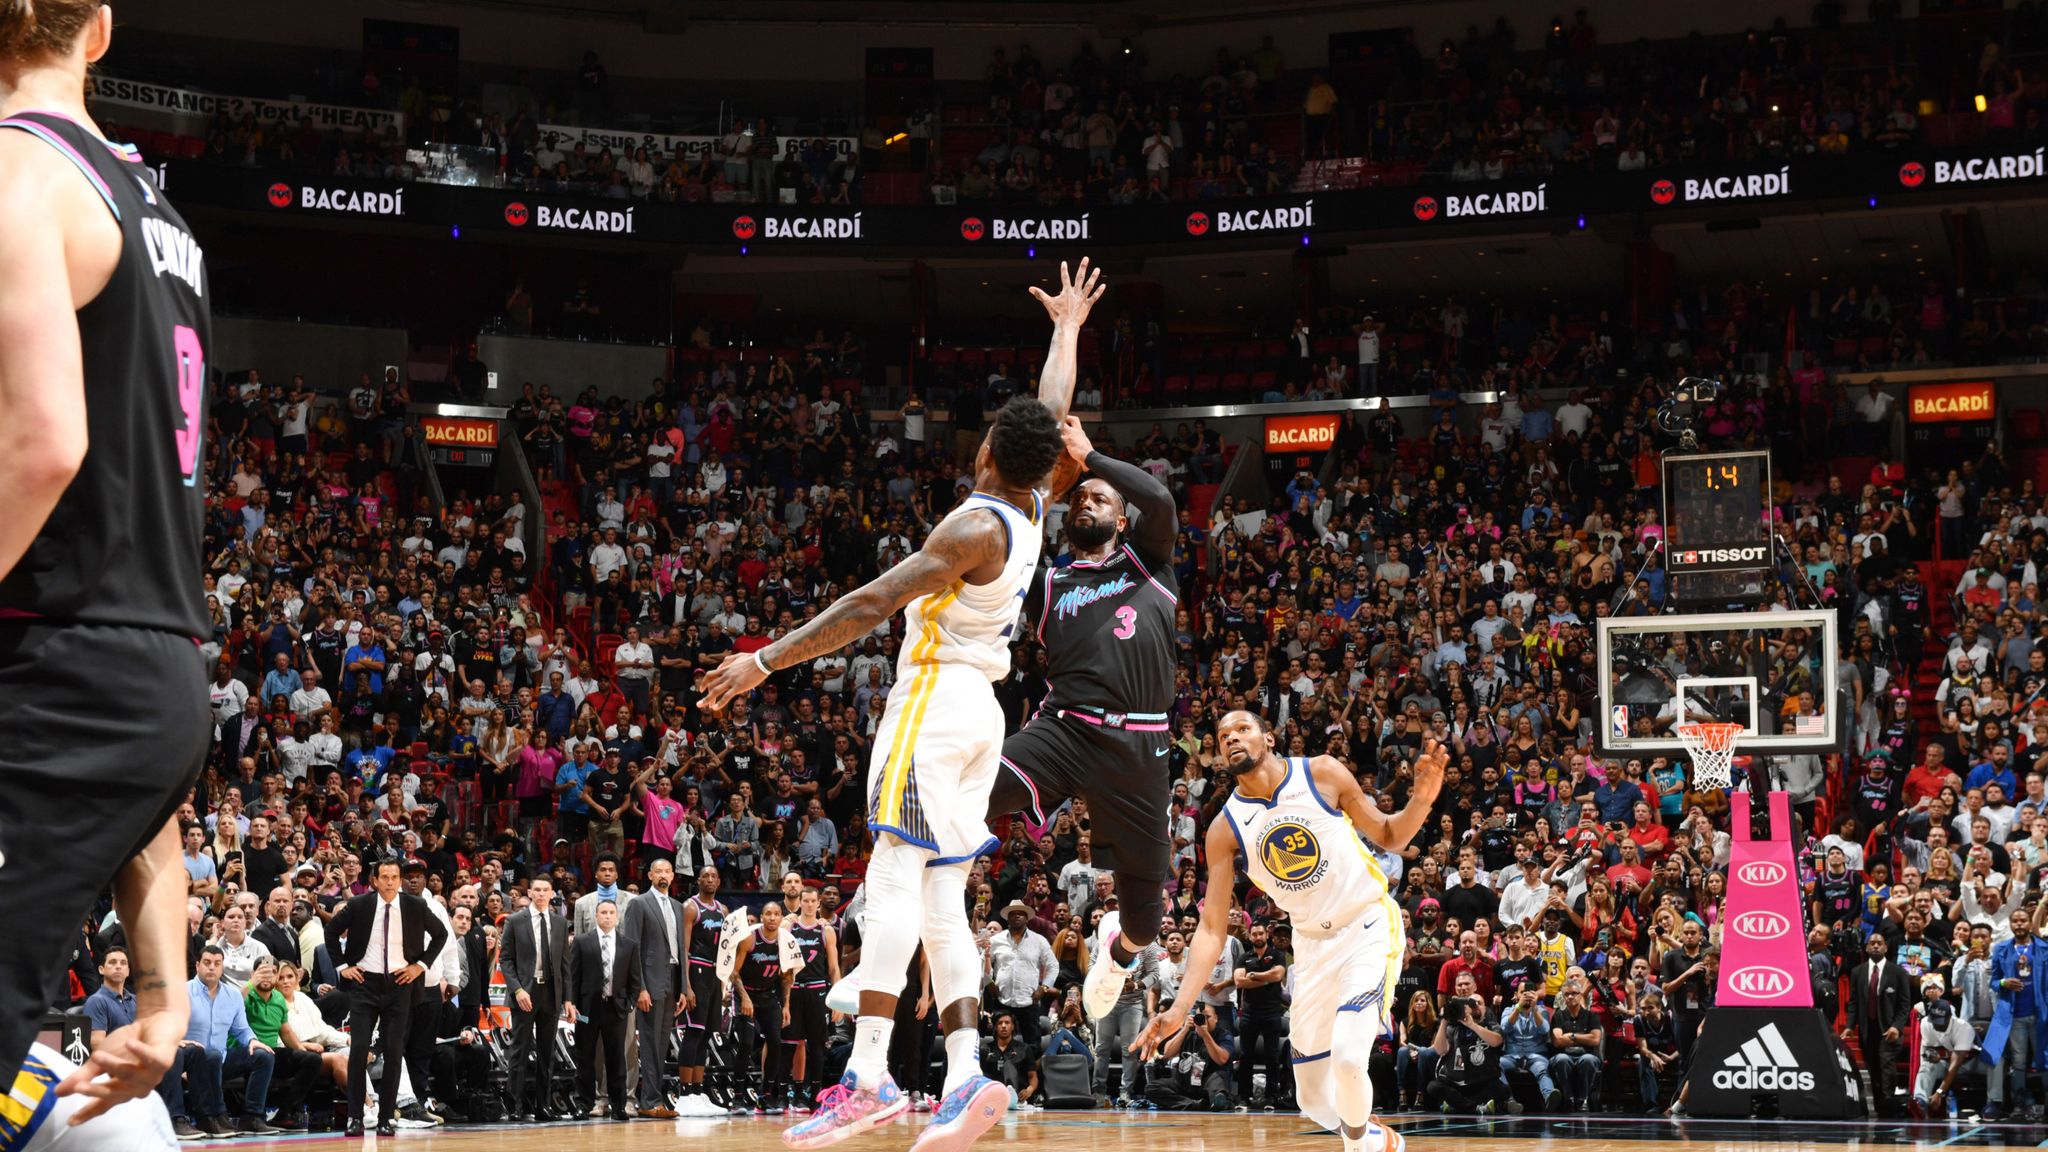 Miami Heat: Should Dwyane Wade shoot more 3-pointers?